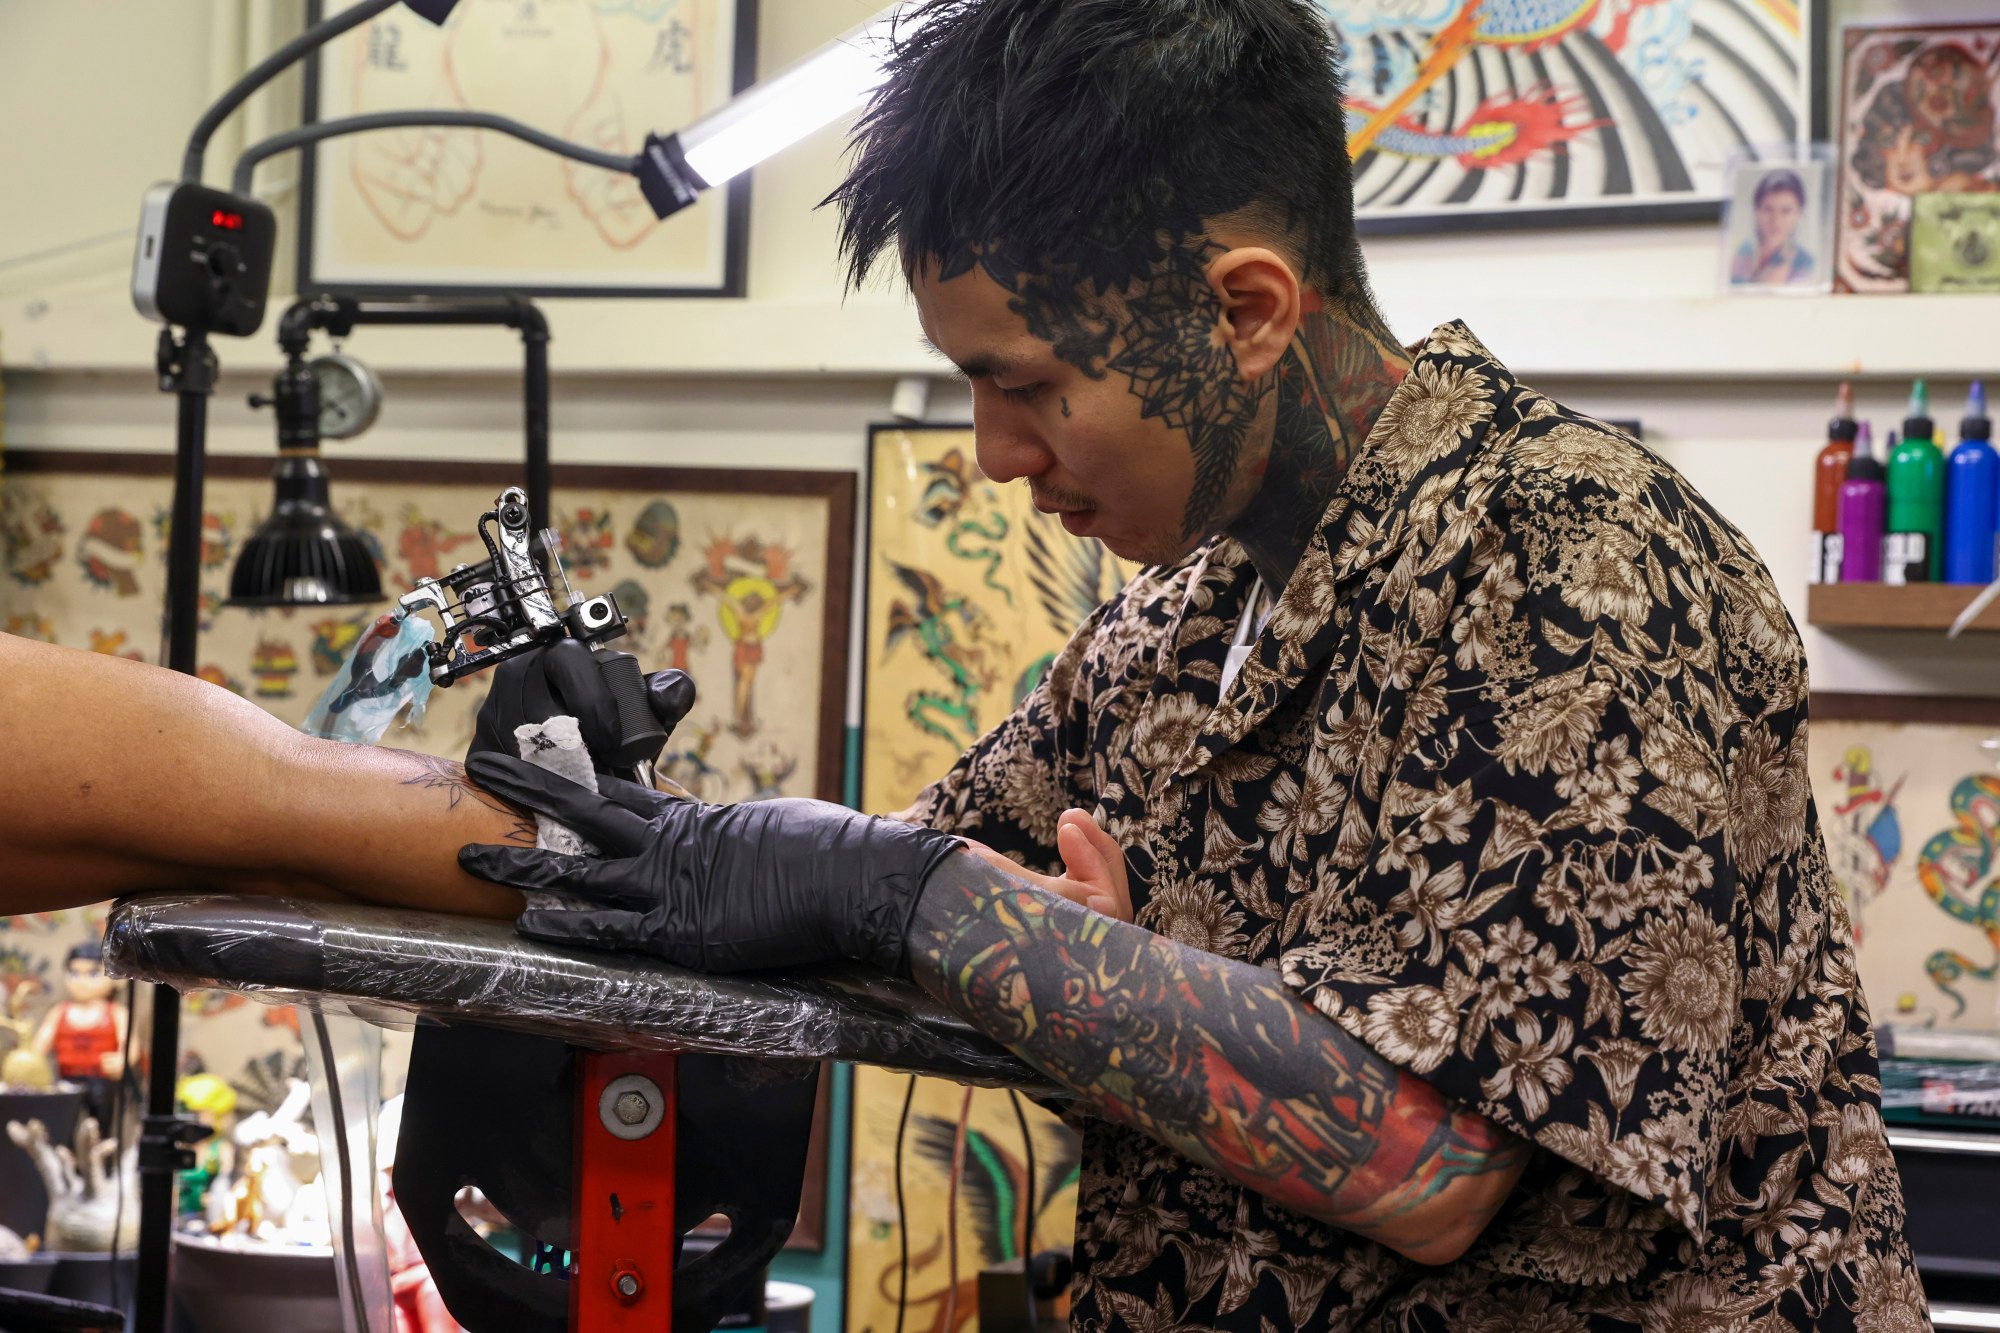 More Hongkongers choosing body art to ink out pandemic boredom, say tattoo  artists | South China Morning Post